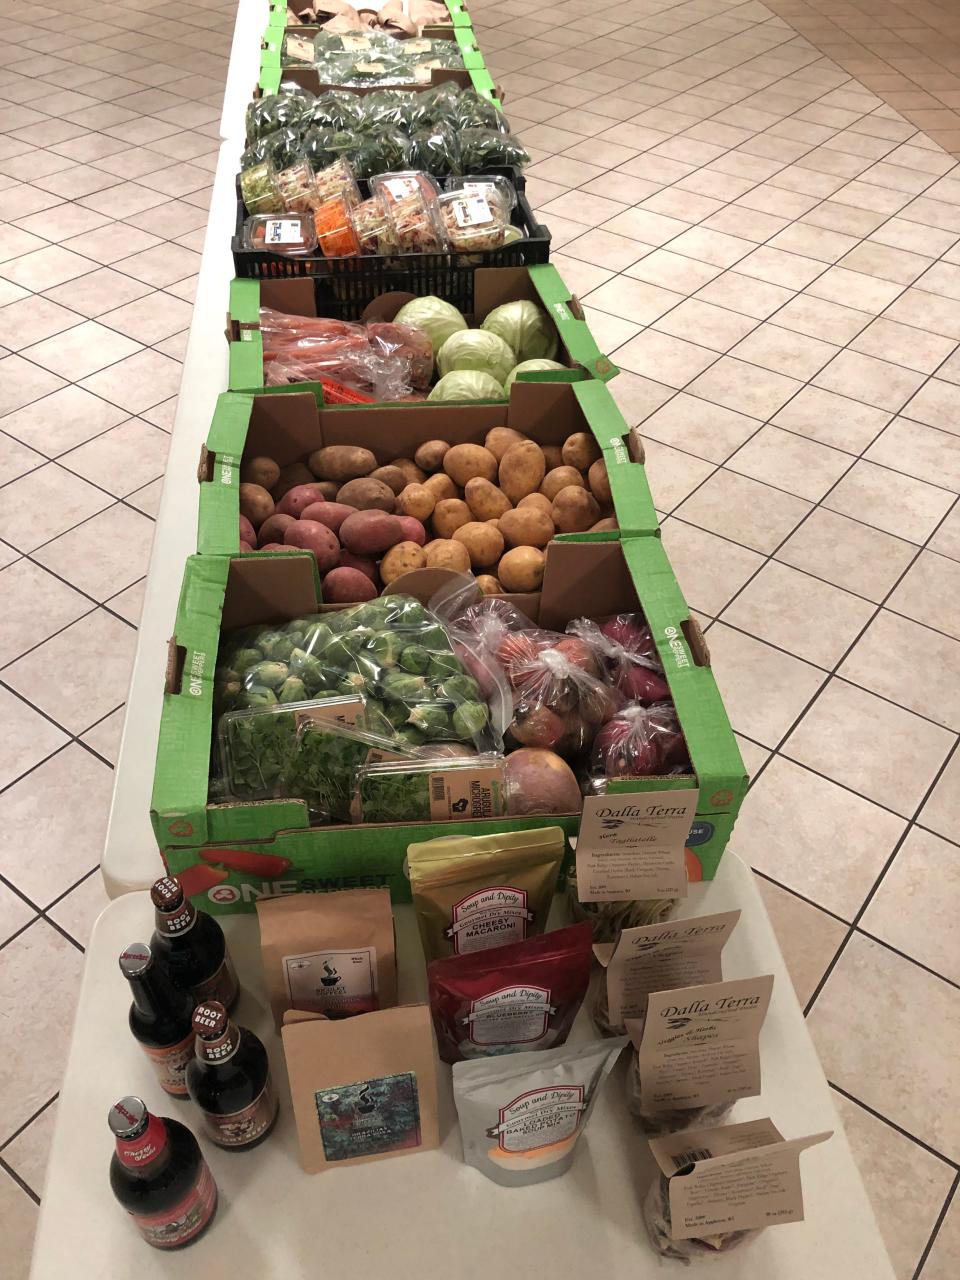 Boxes of produce at Farm Fresh Express.